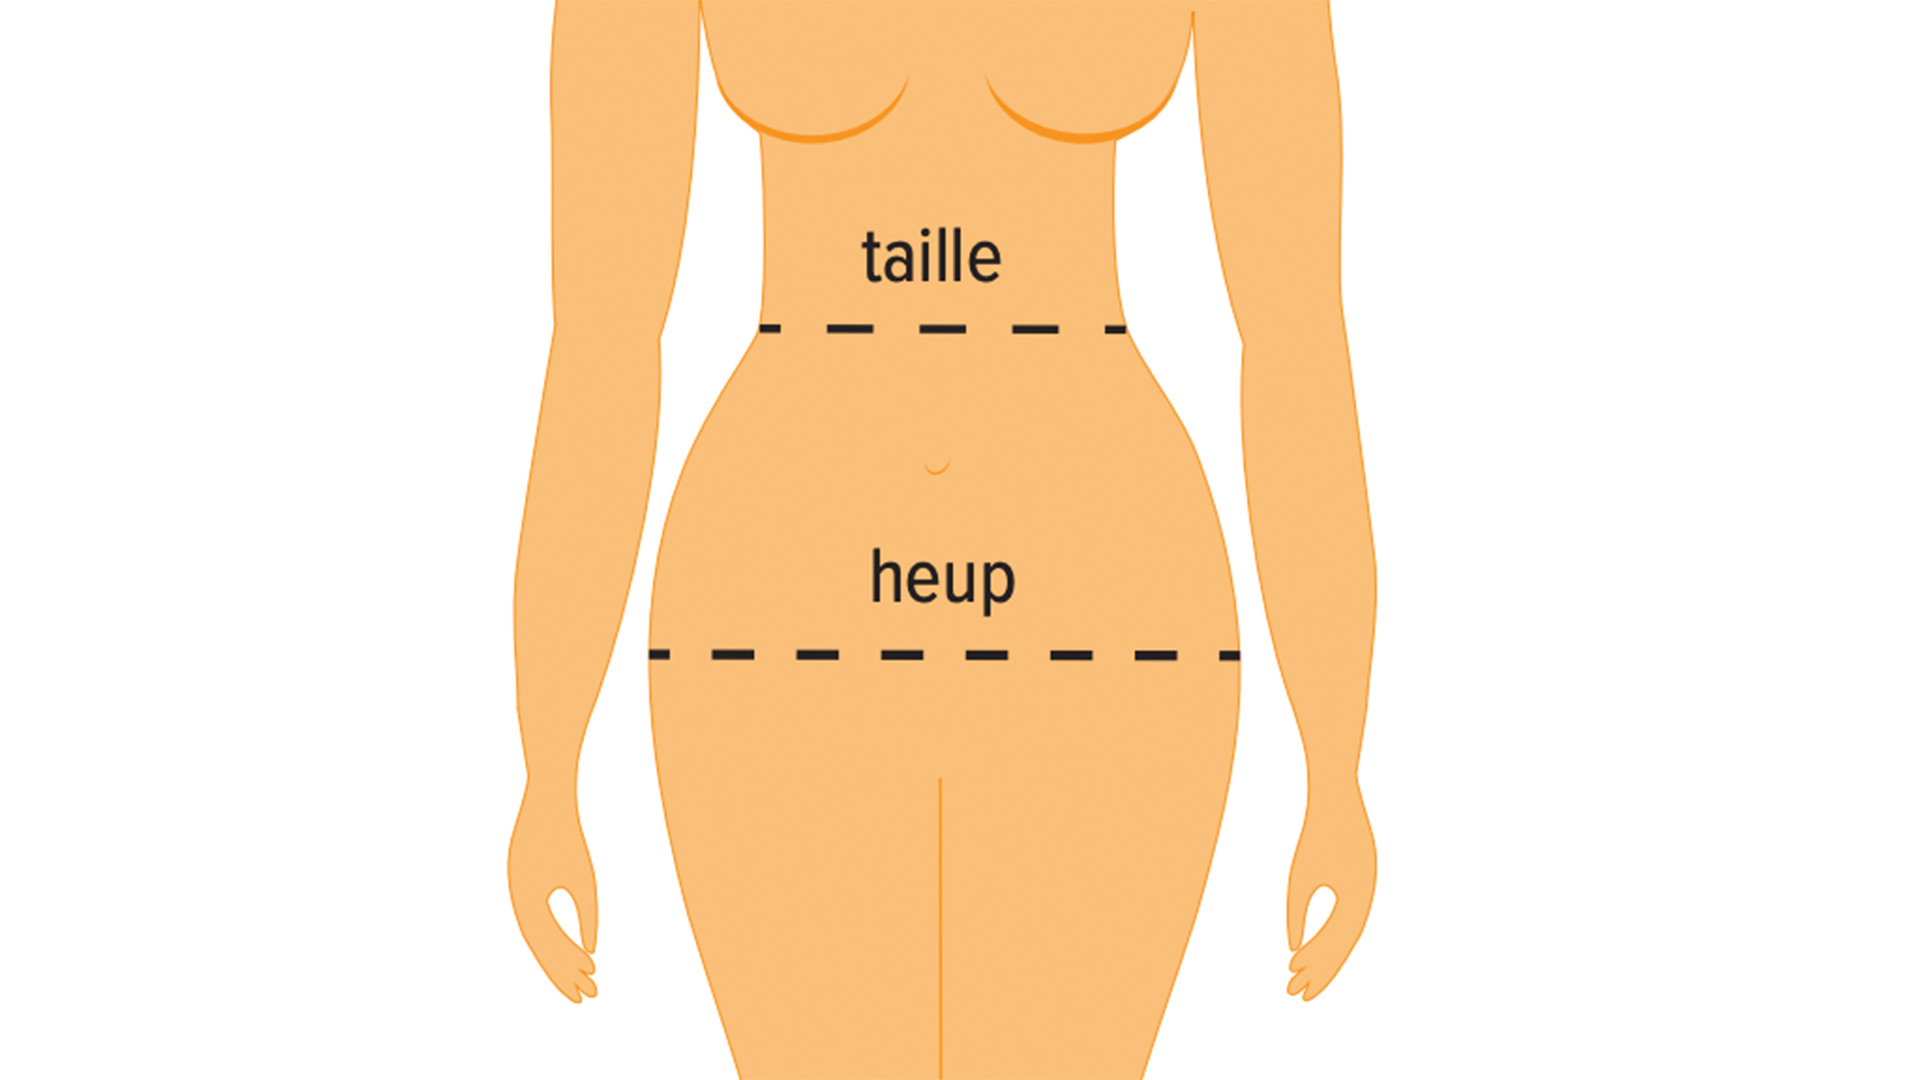 Taille- & heupmeting